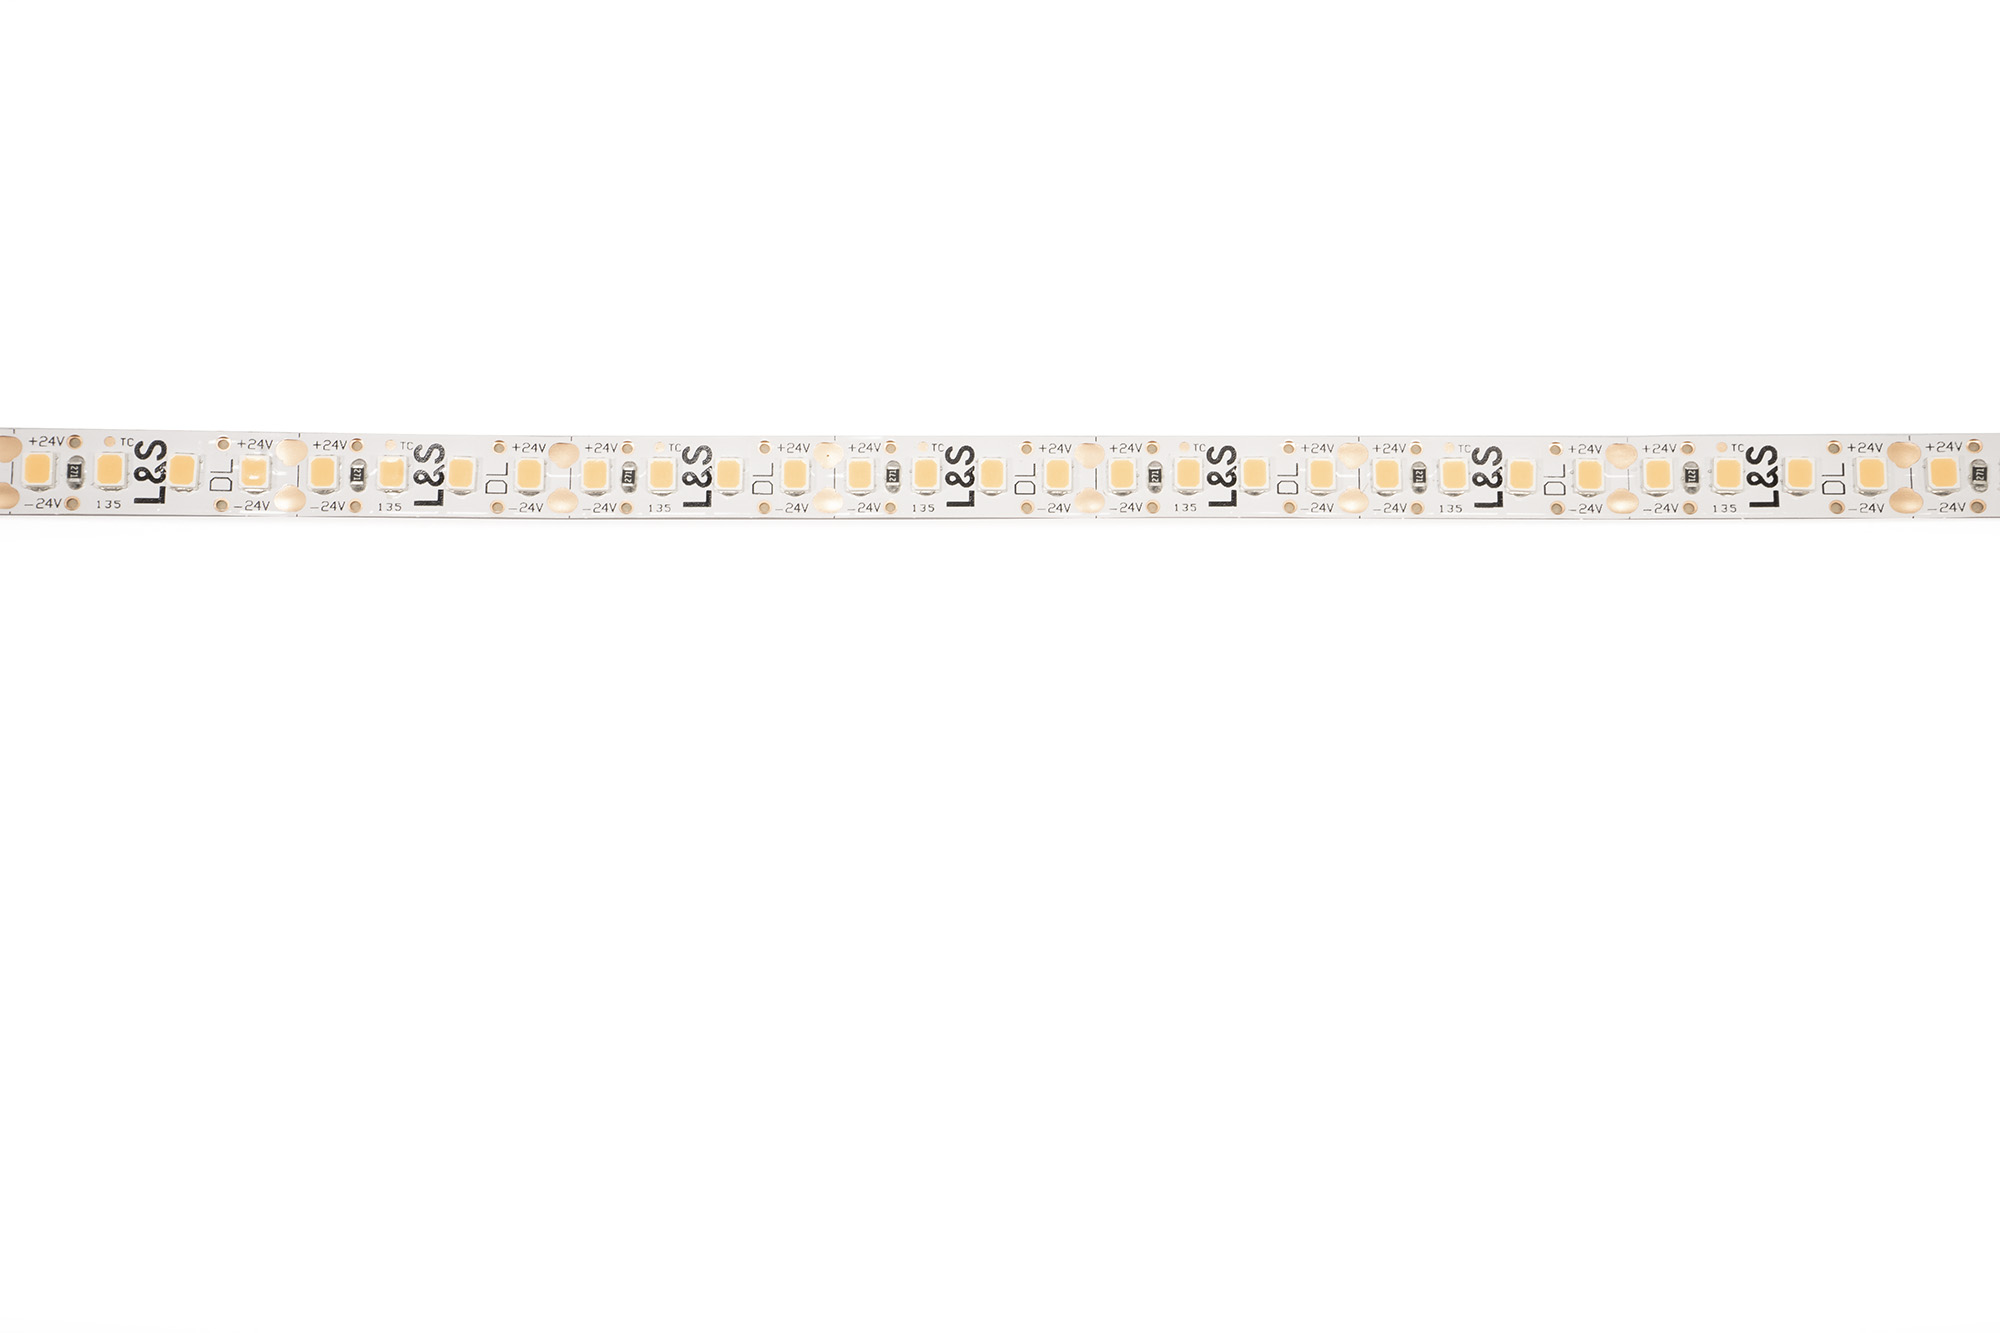 L&S LED-Band HE 160LEDs/m (2835), 2700K, 4 LEDs/25mm, 24DC, 8,6W/m, 8mmx5m, 2x Anschlussltg. 2000mm, white PCB, IP20